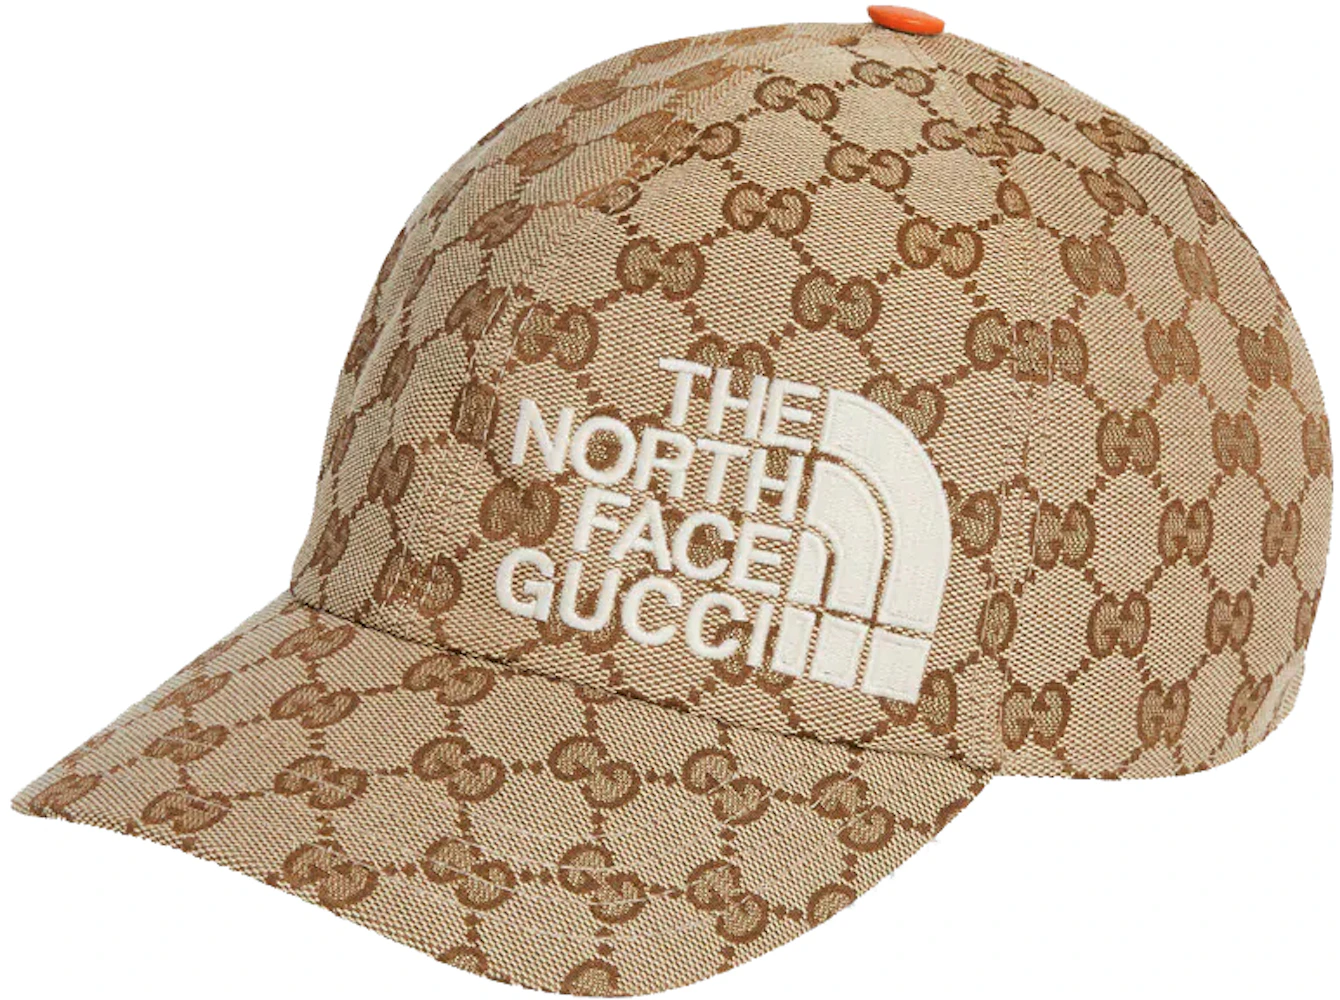 Gucci The North Face Baseball Hat